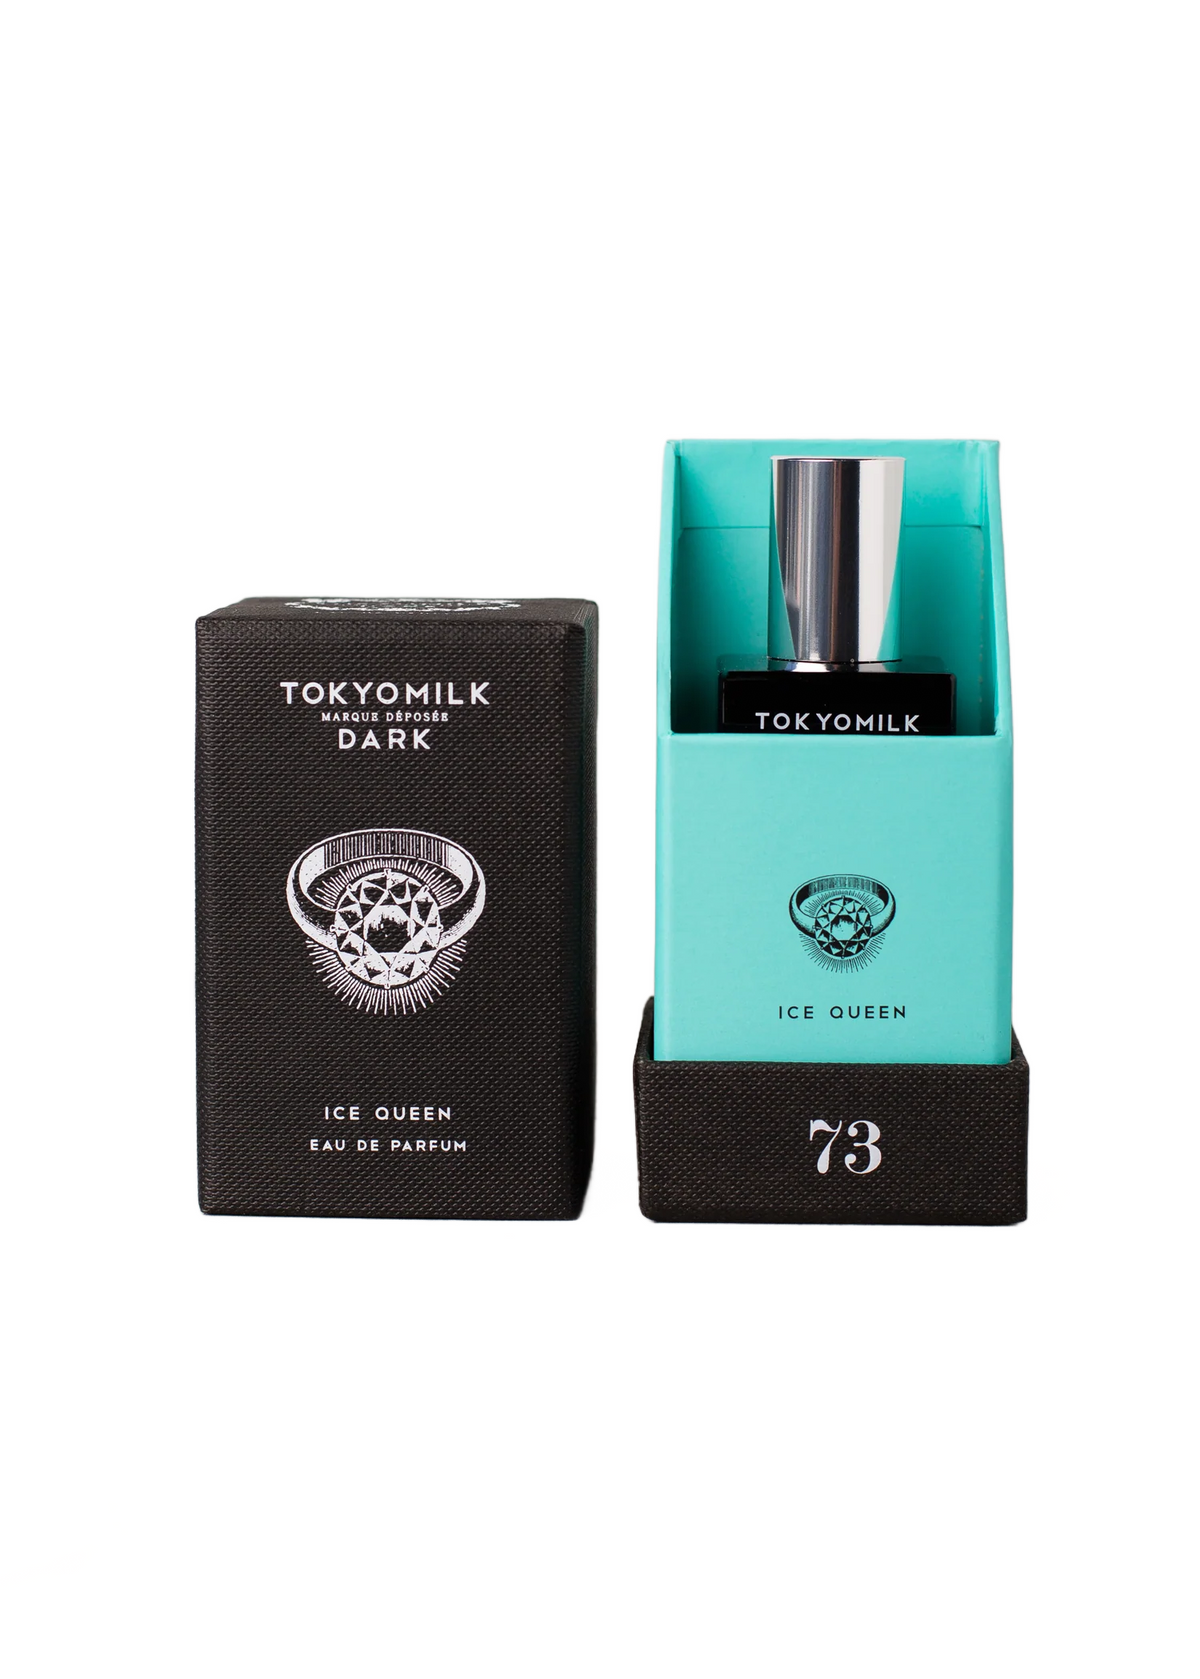 Two Margot Elena TokyoMilk Dark Ice Queen No. 73 Eau De Parfum products: a black box with silver details and a turquoise box containing an Eau De Parfum bottle, labeled '73'.